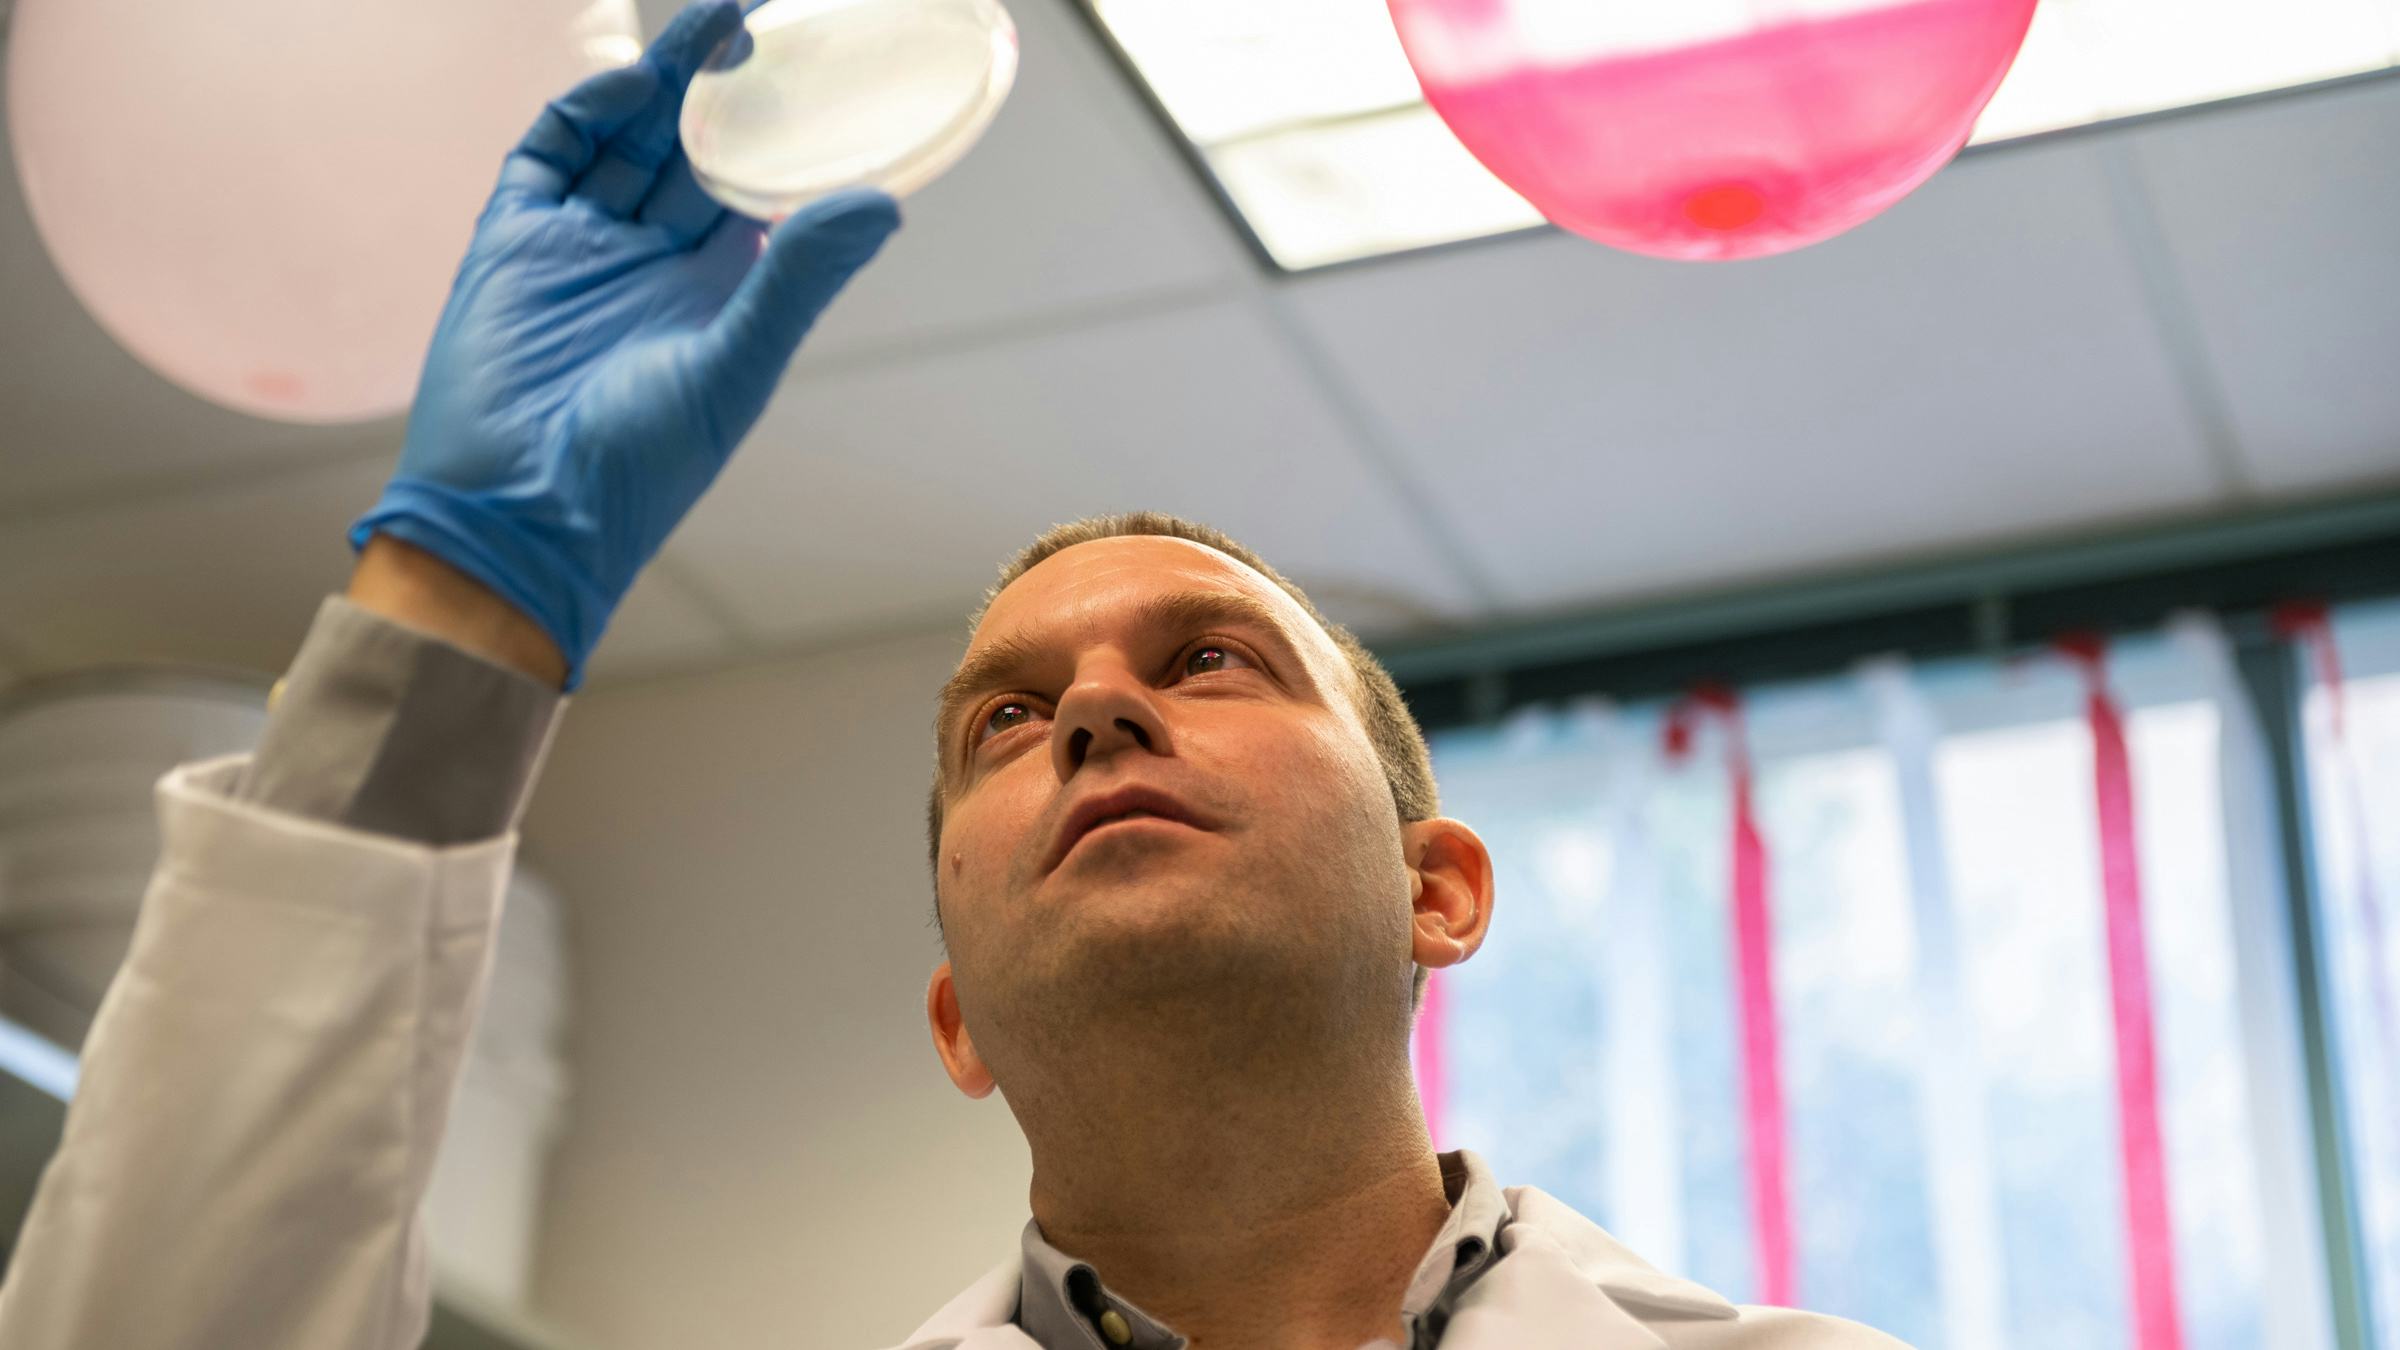 Jeff Barrick examines a dish of E. coli